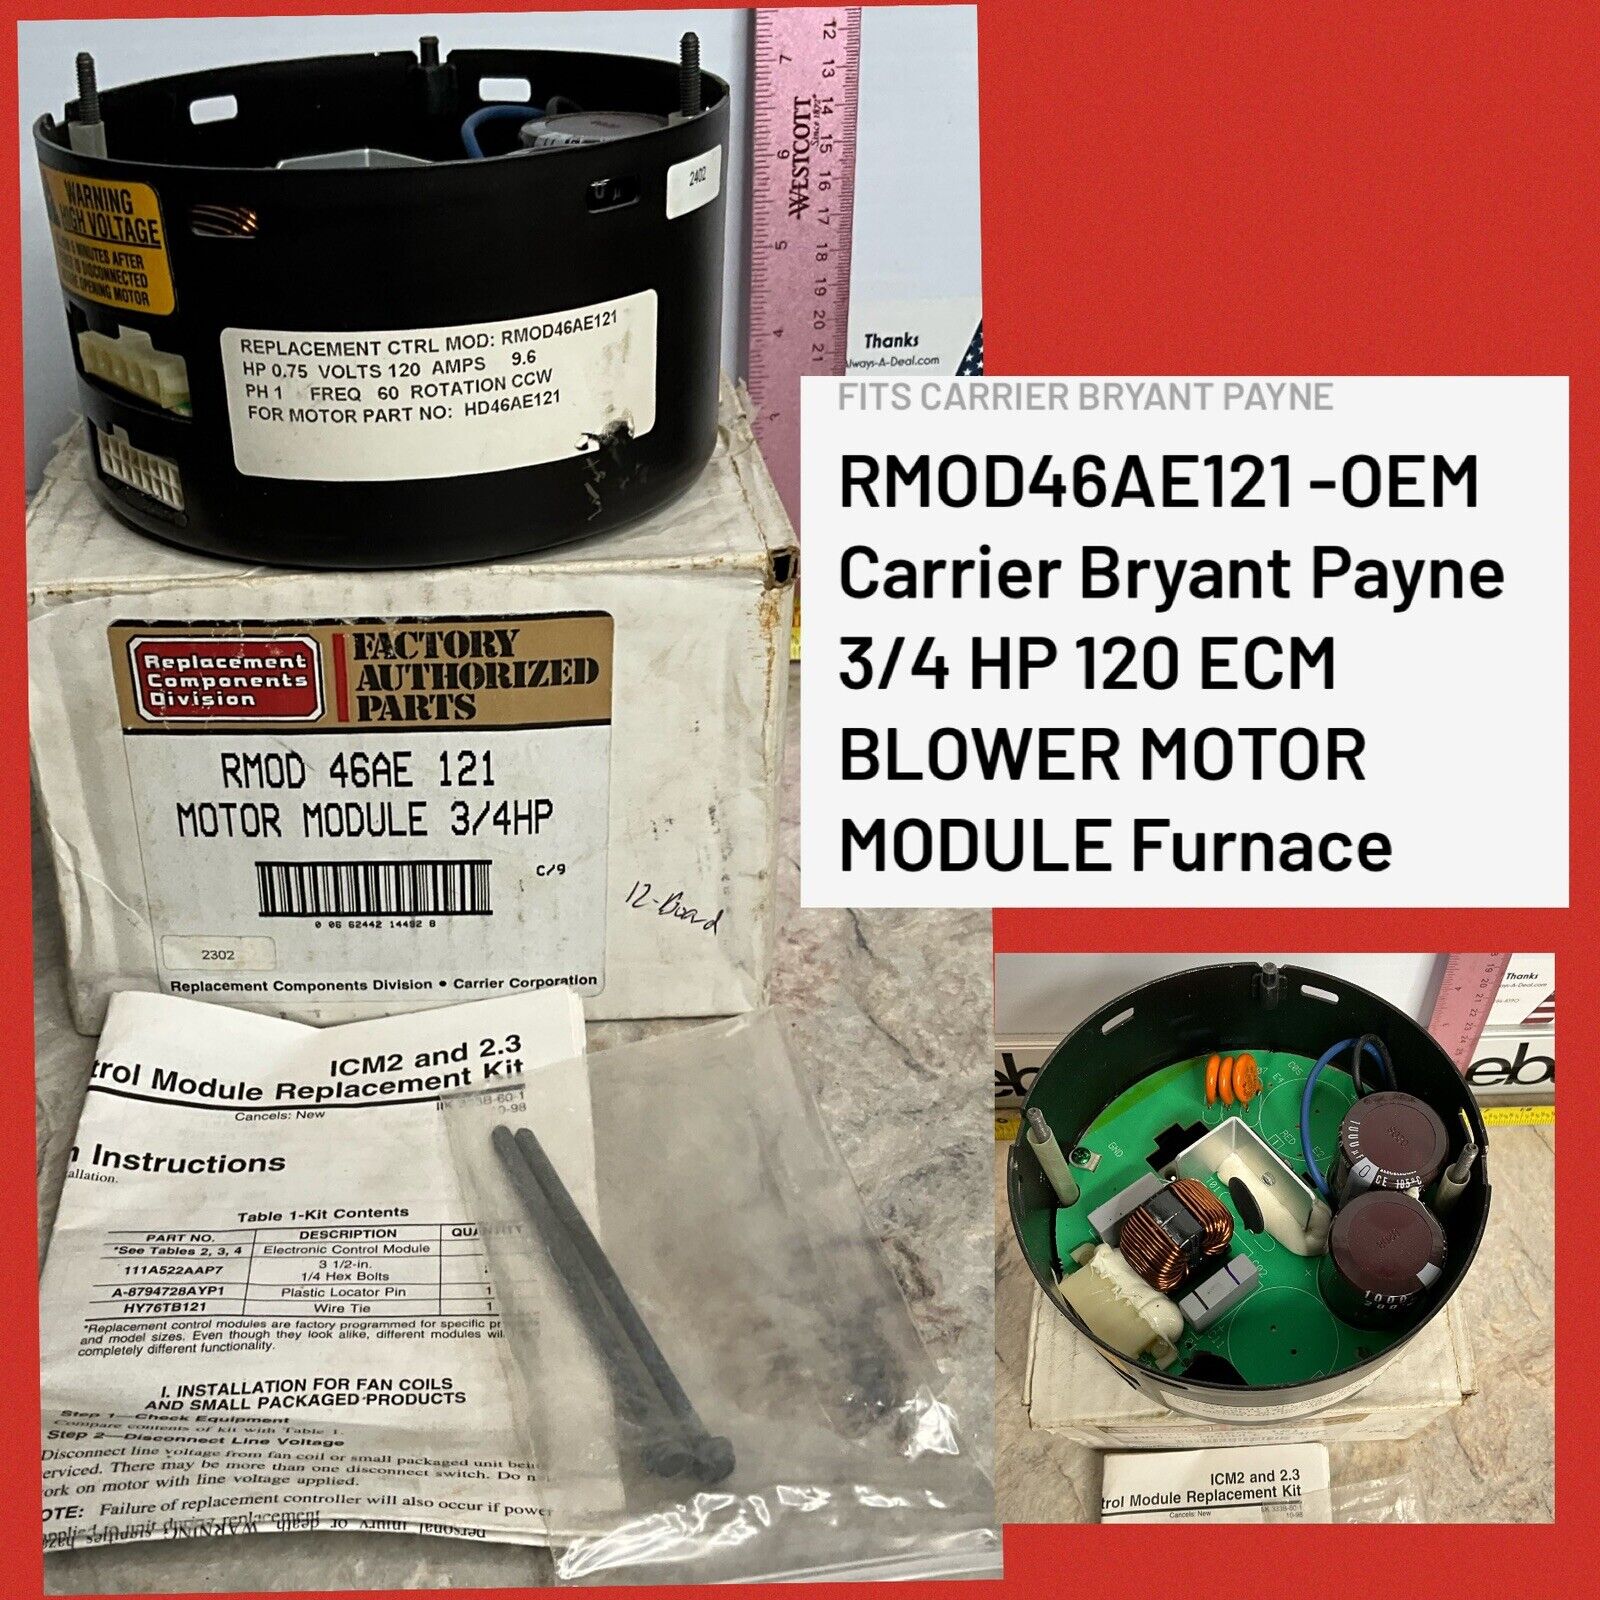 RMOD46AE121 OEM Carrier Bryant Payne 3/4 HP 120 ECM BLOWER MOTOR MODULE Furnace